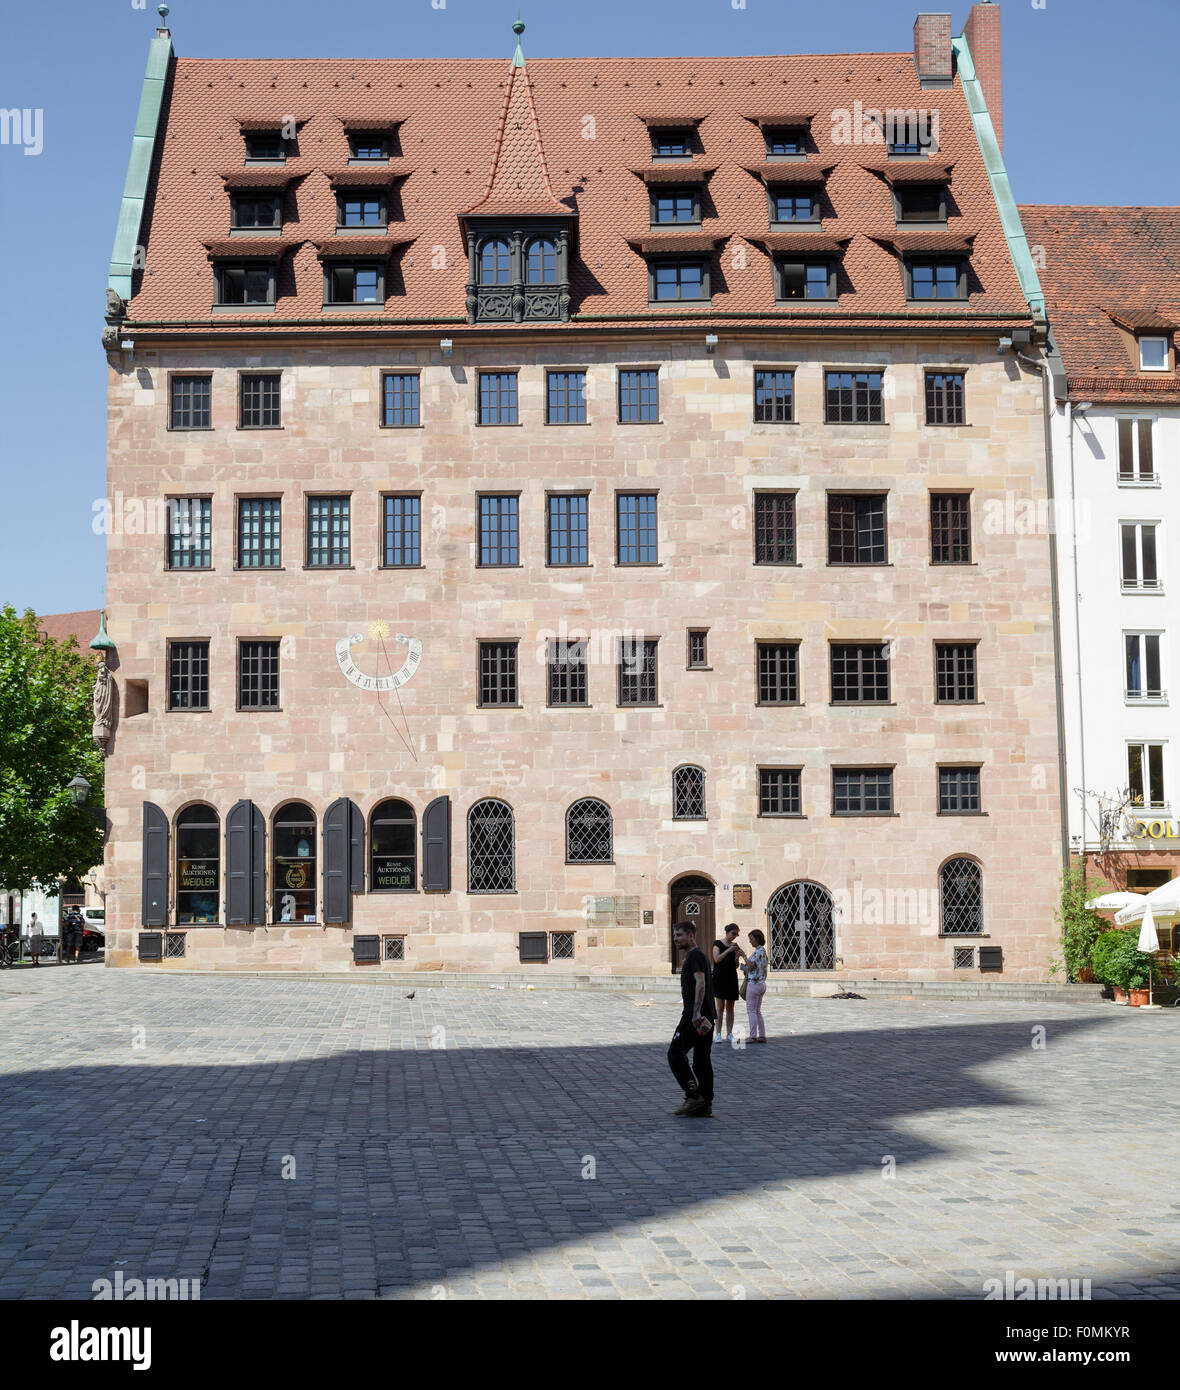 Schürstabhaus, Nuremberg, Bavière, Allemagne Banque D'Images